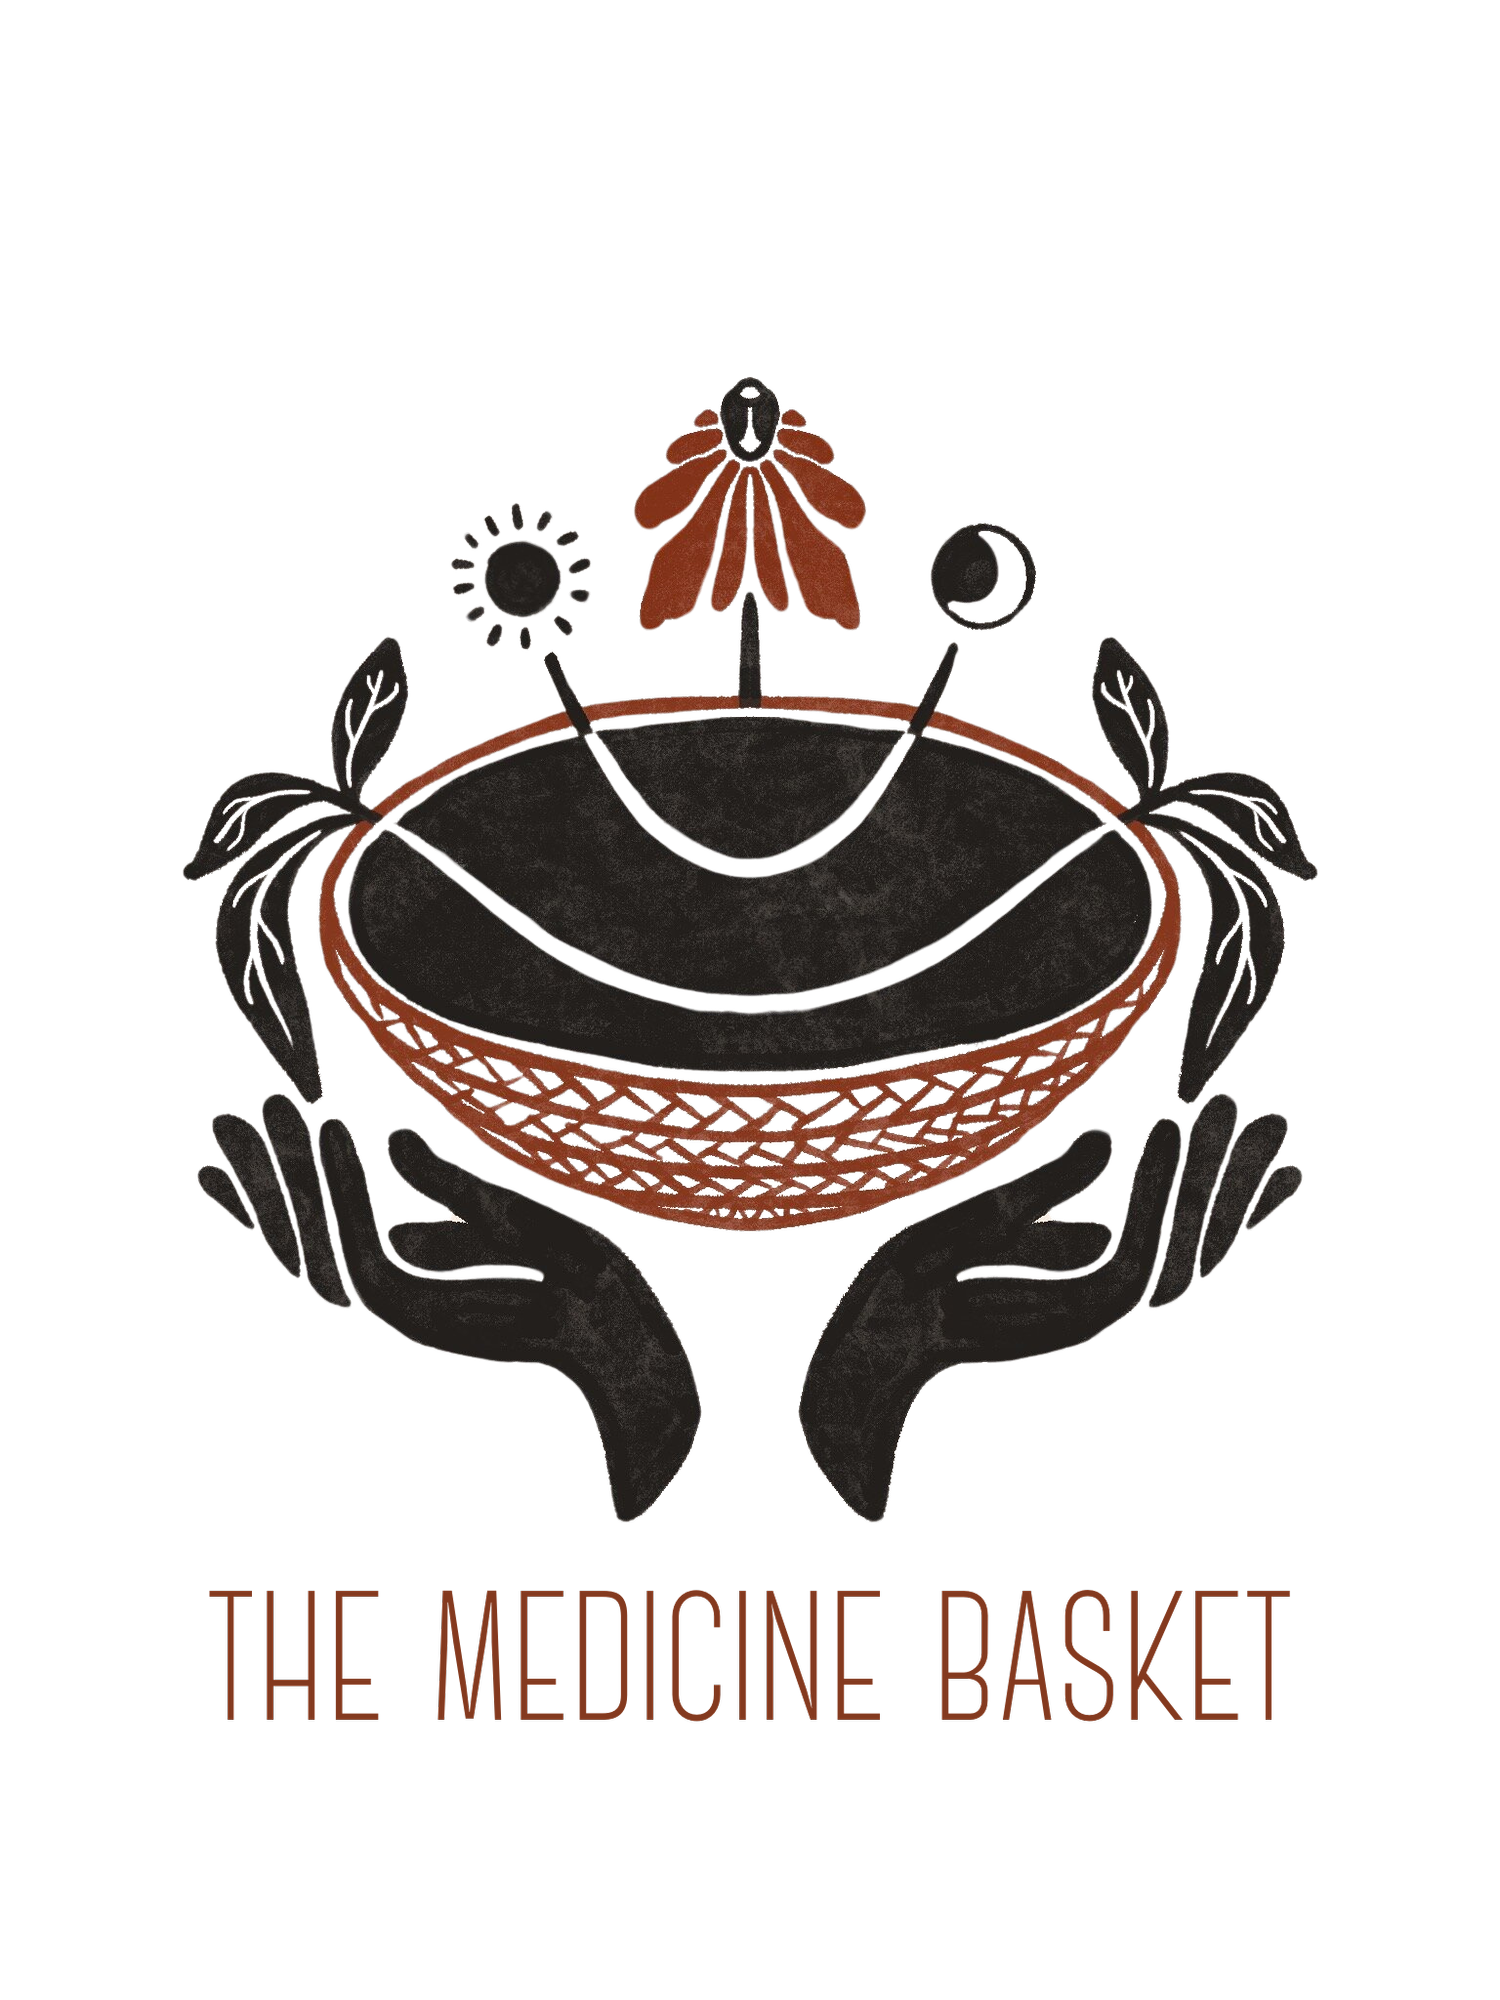 The Medicine Basket